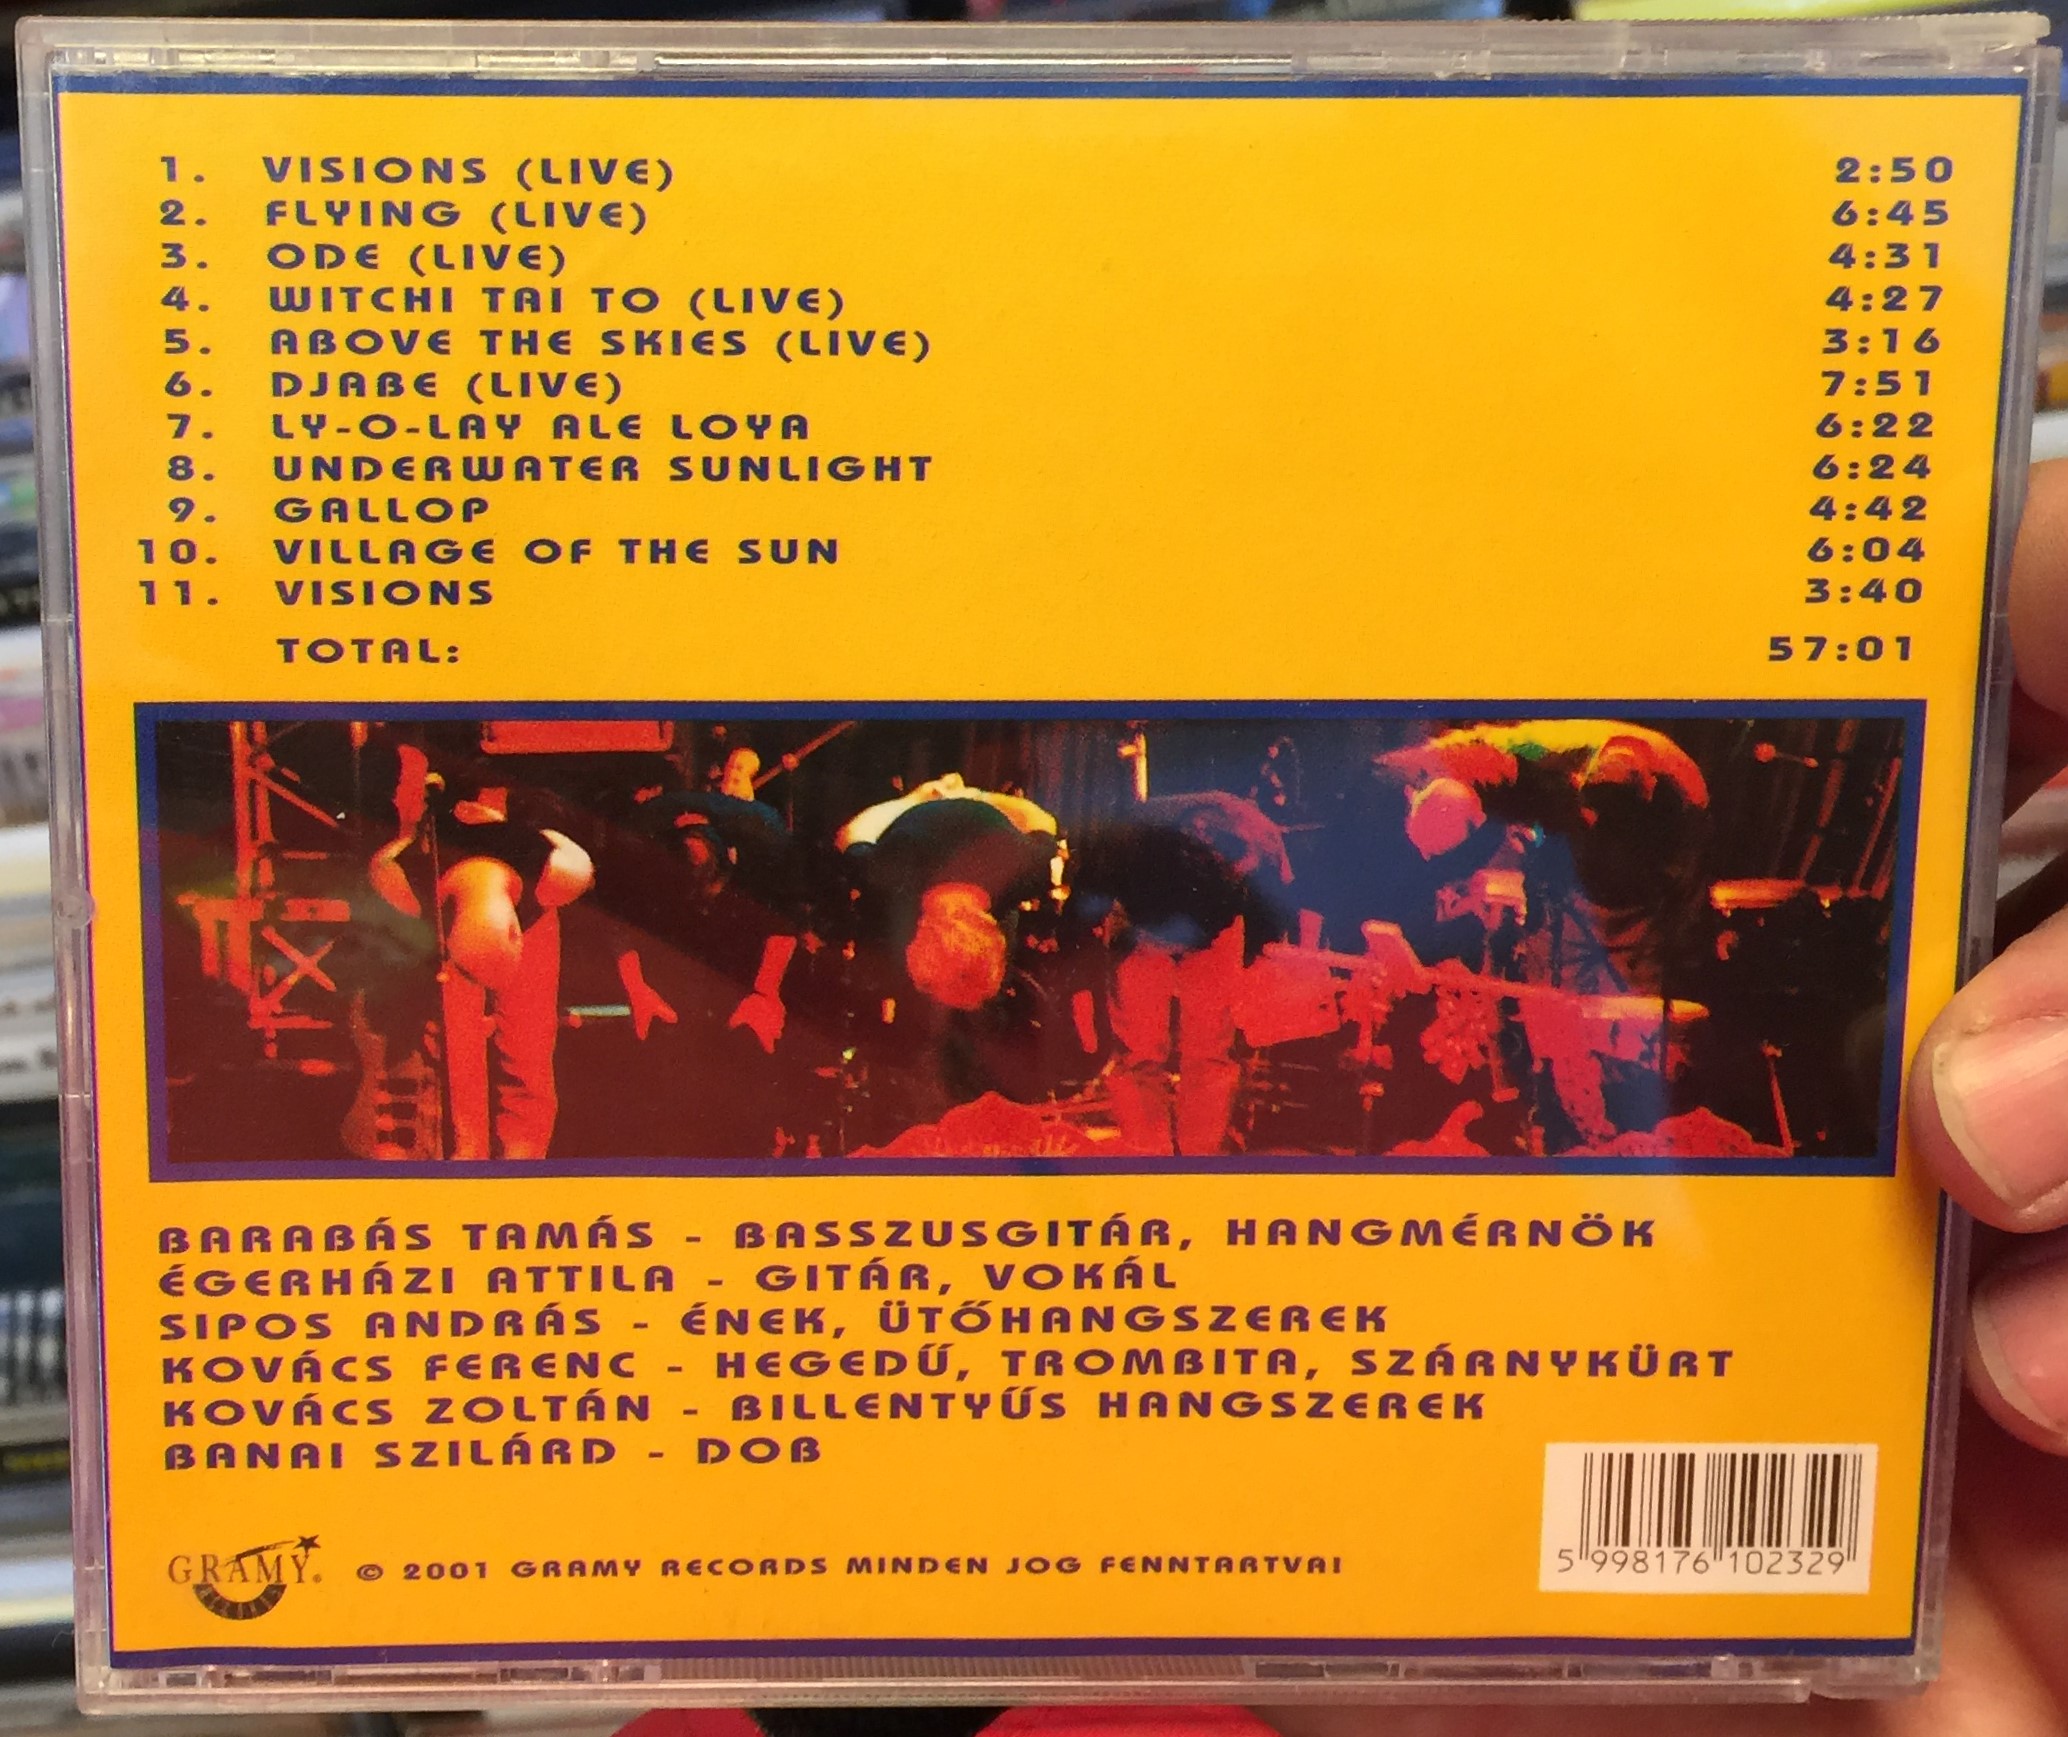 djabe-jraj-tsz-s-gramy-records-audio-cd-2001-gr-023-2-.jpg